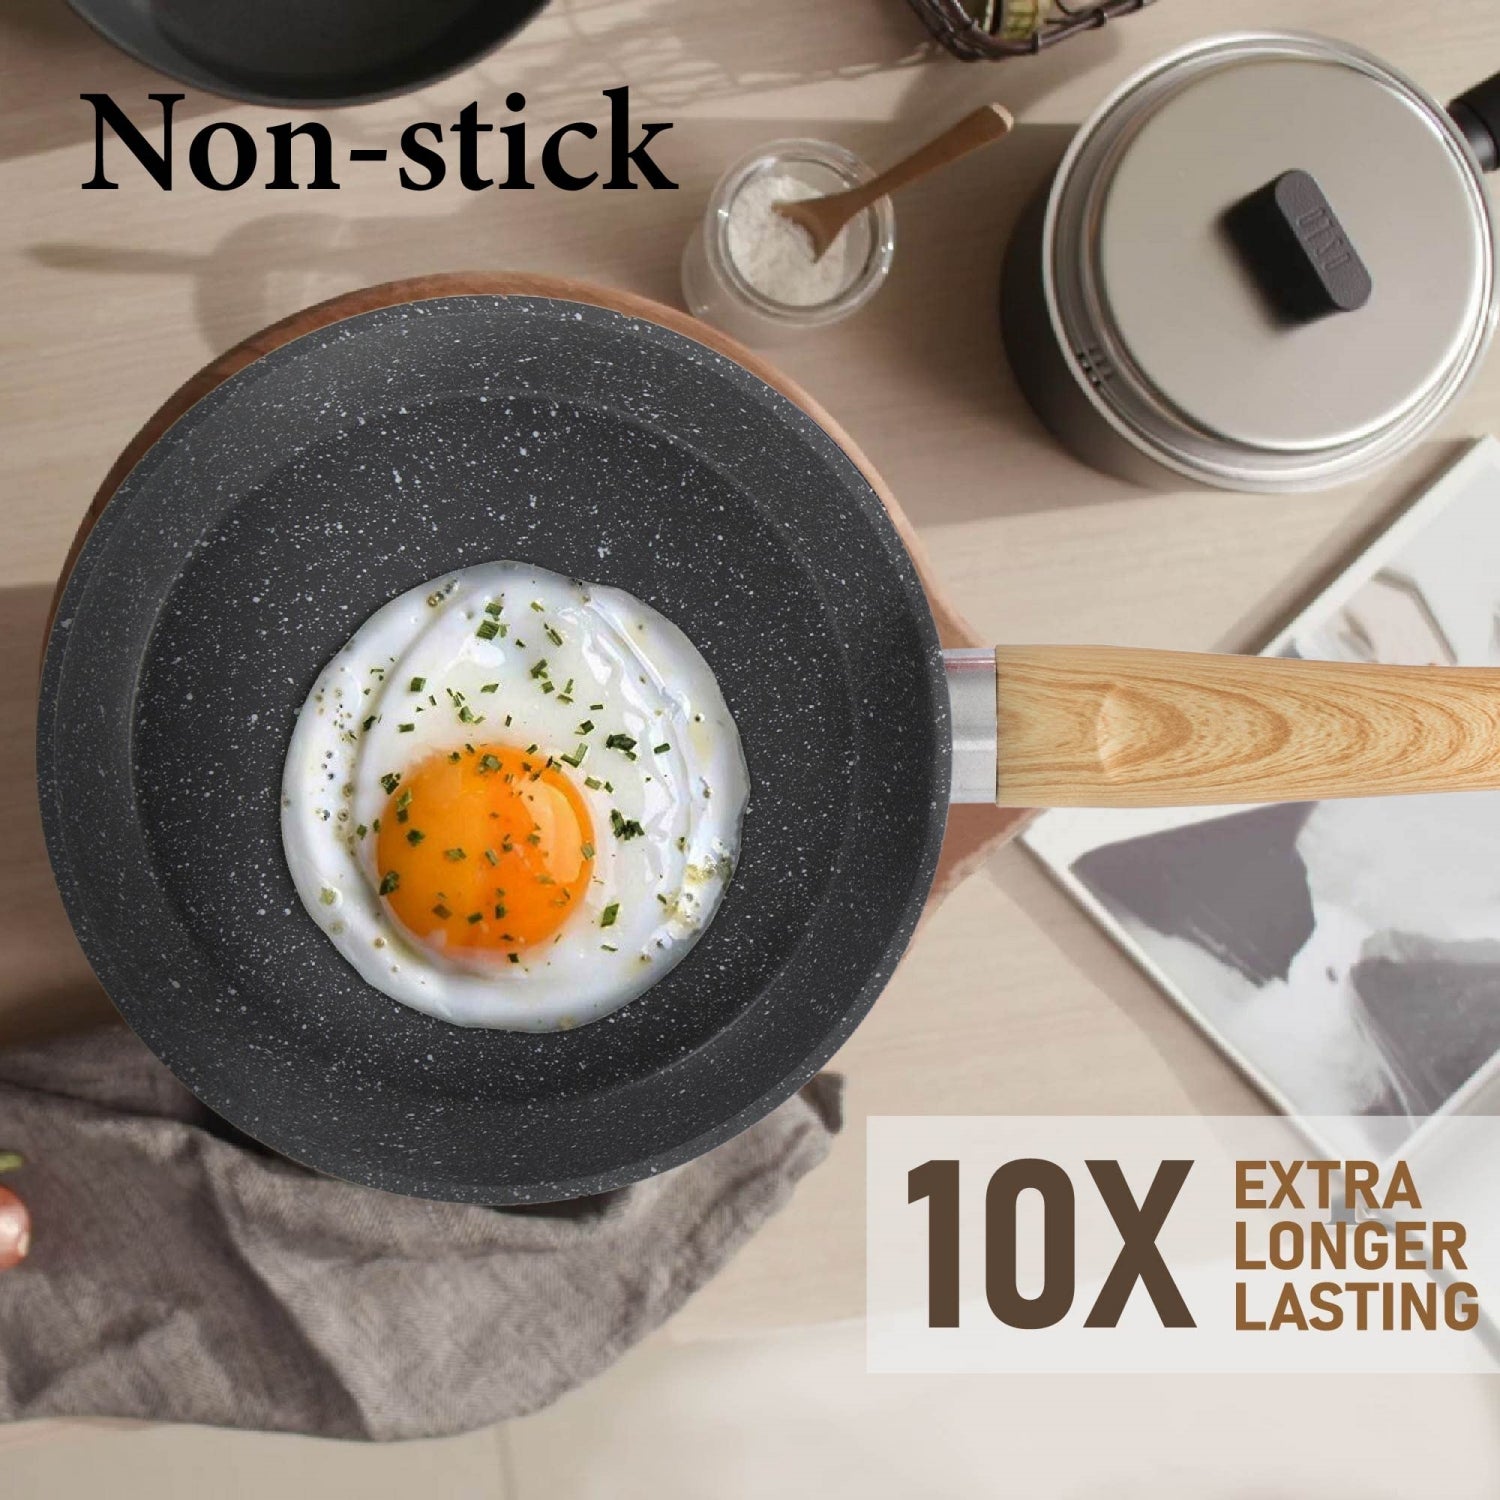 Masterclass Frying Pan 11 Inch Nonstick Skillet Premium Cookware (2 inch  Deep)